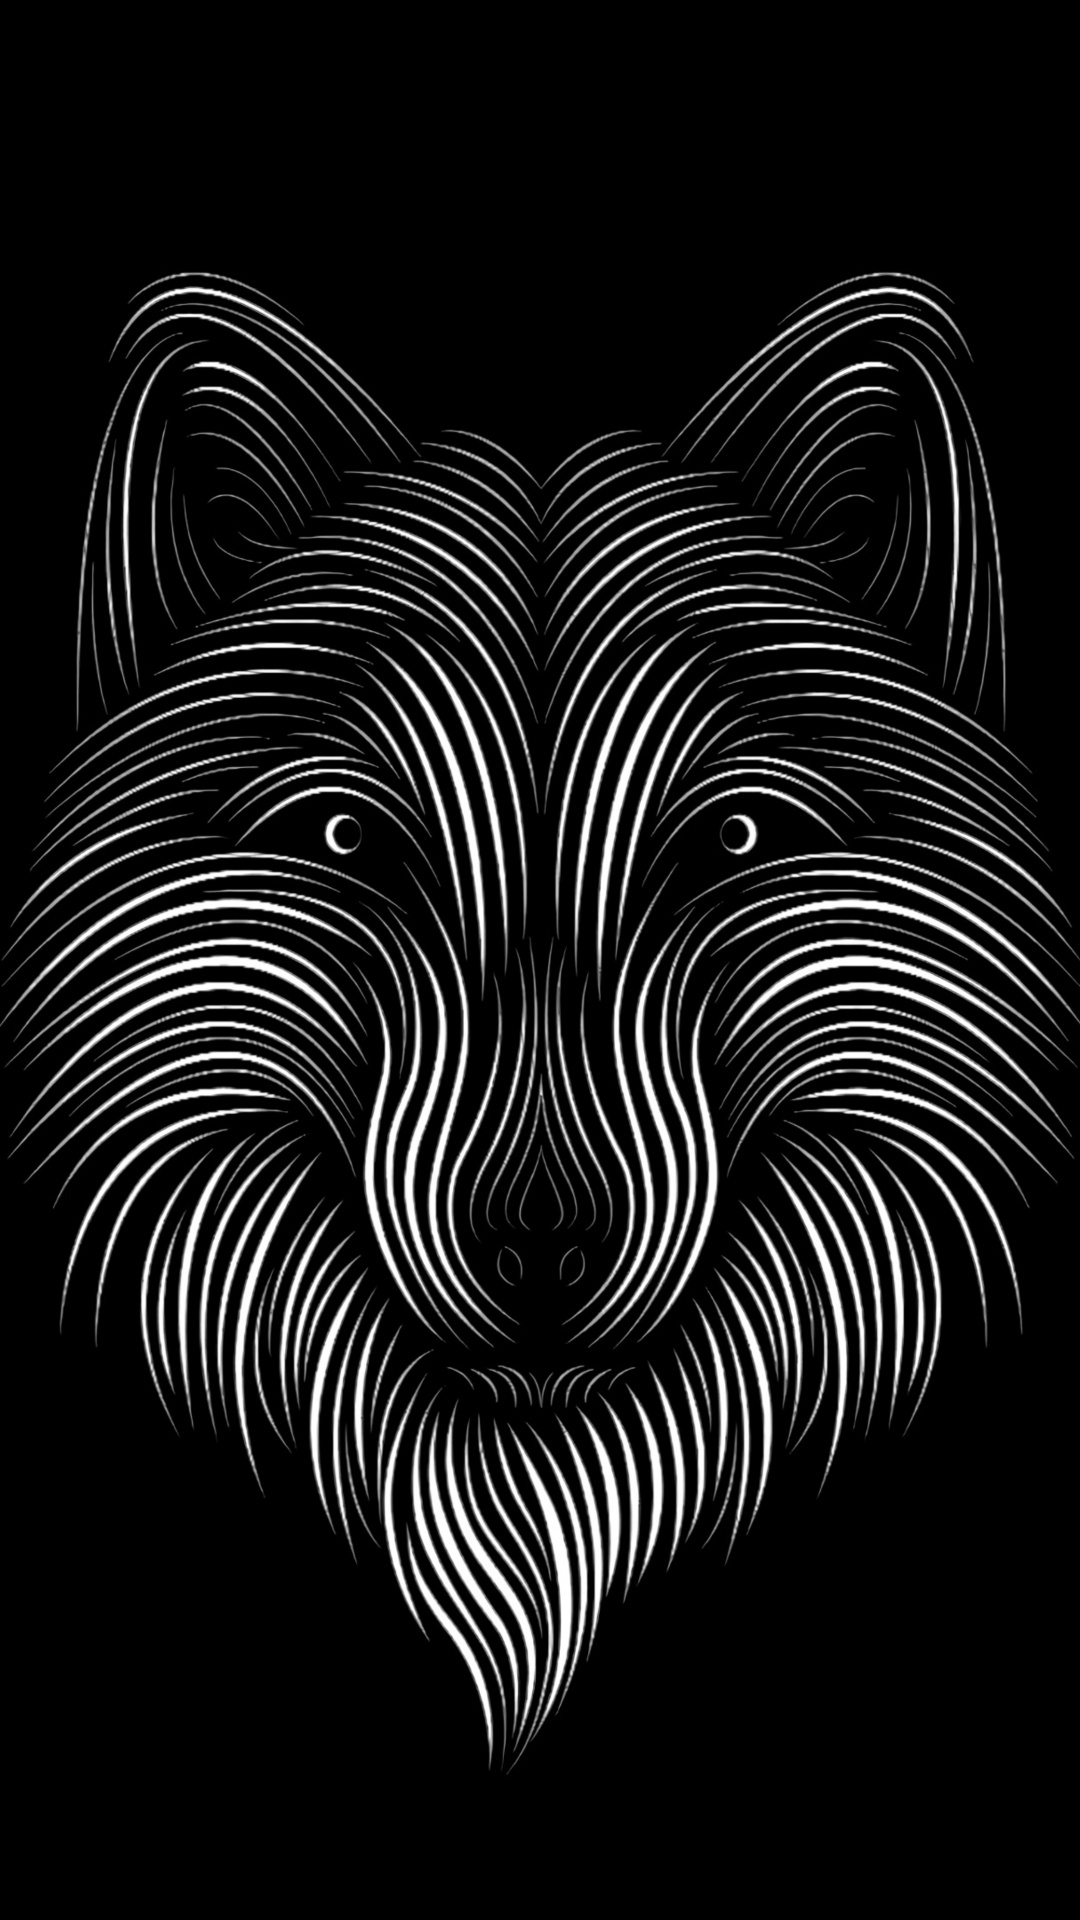 Black and White Zebra Illustration. Wallpaper in 1080x1920 Resolution